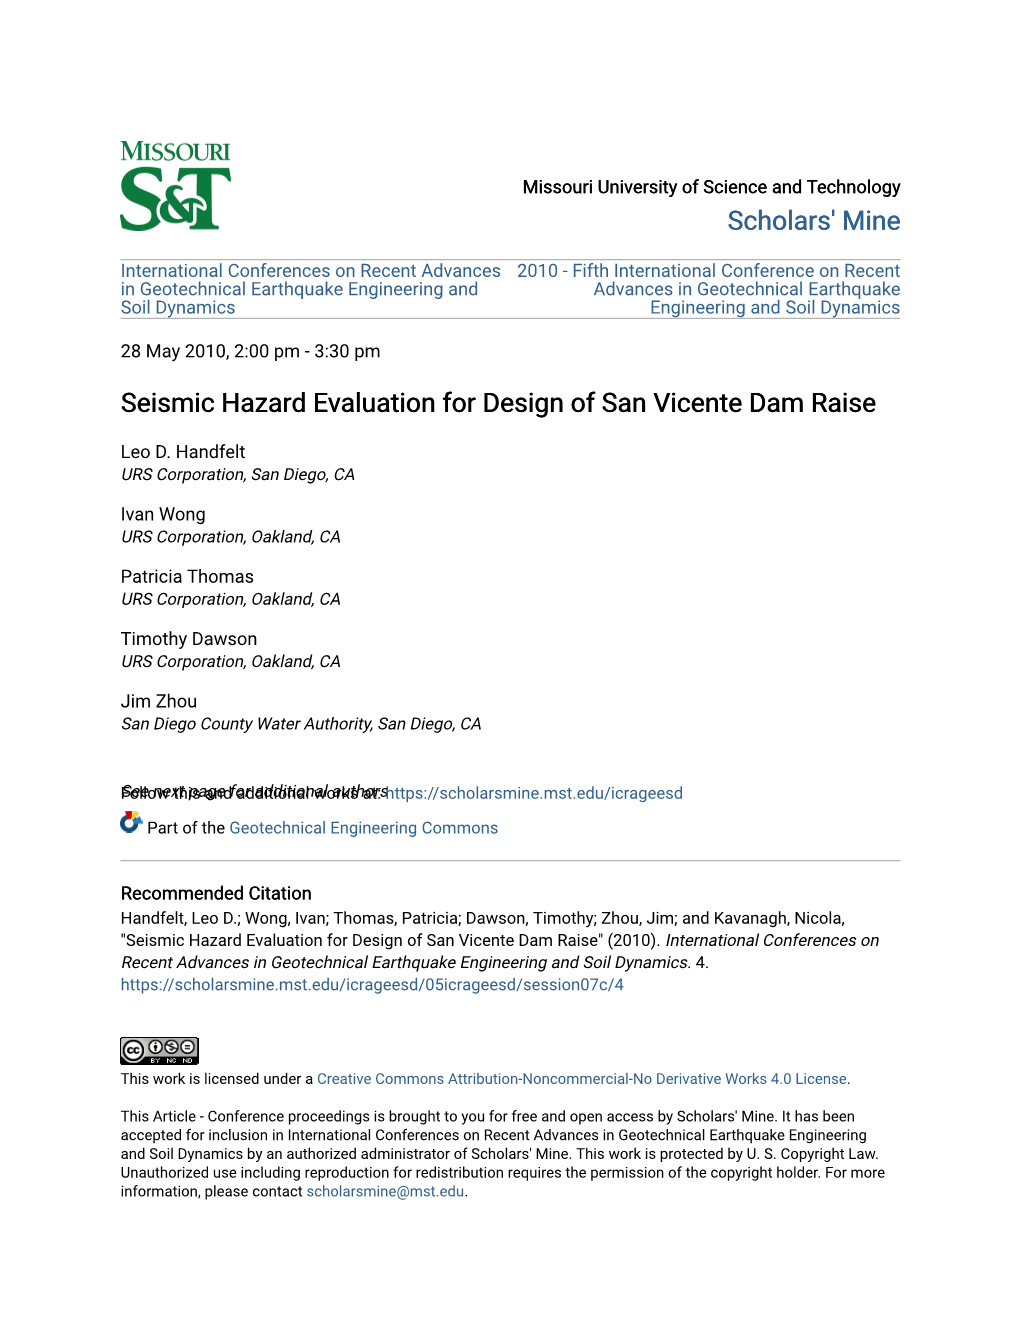 Seismic Hazard Evaluation for Design of San Vicente Dam Raise